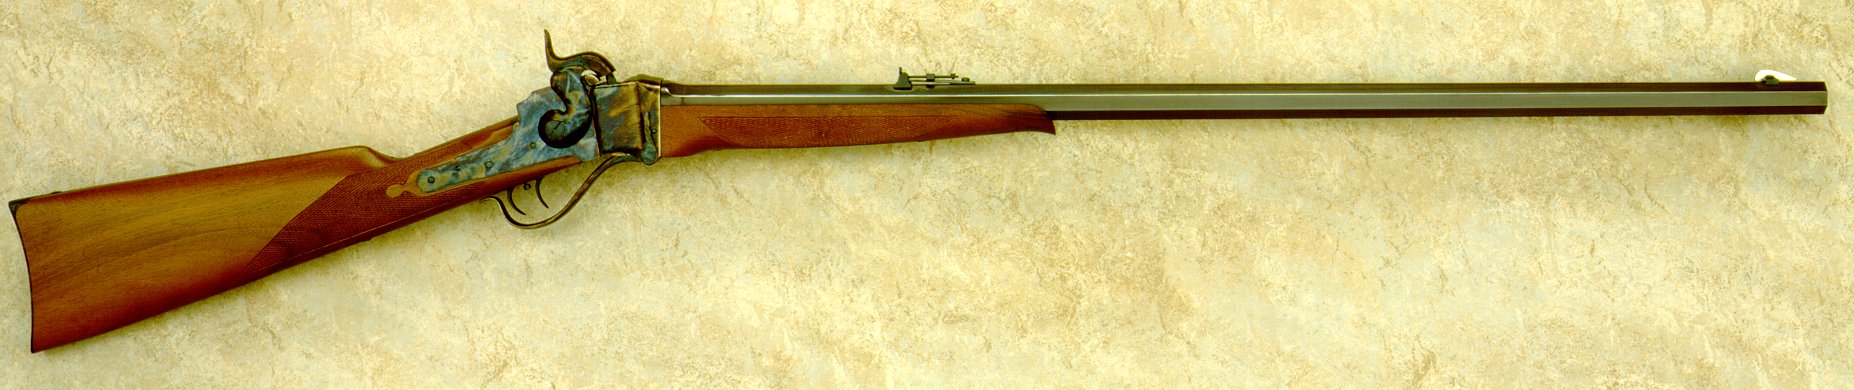 Sharps 1863 Rifle #13